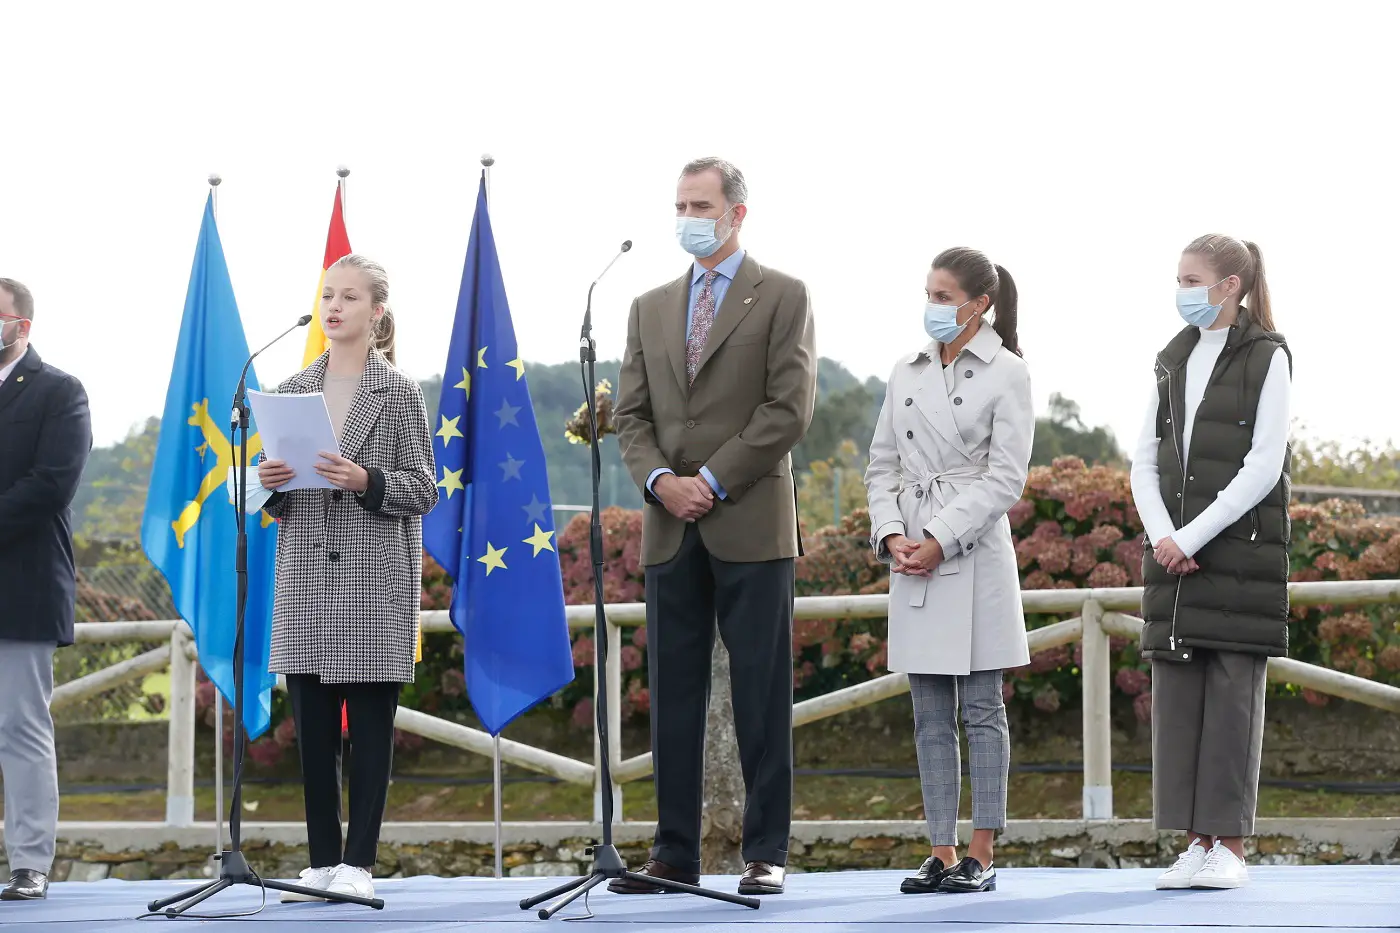 Princess Leonor made second speech during the visit to Asturias